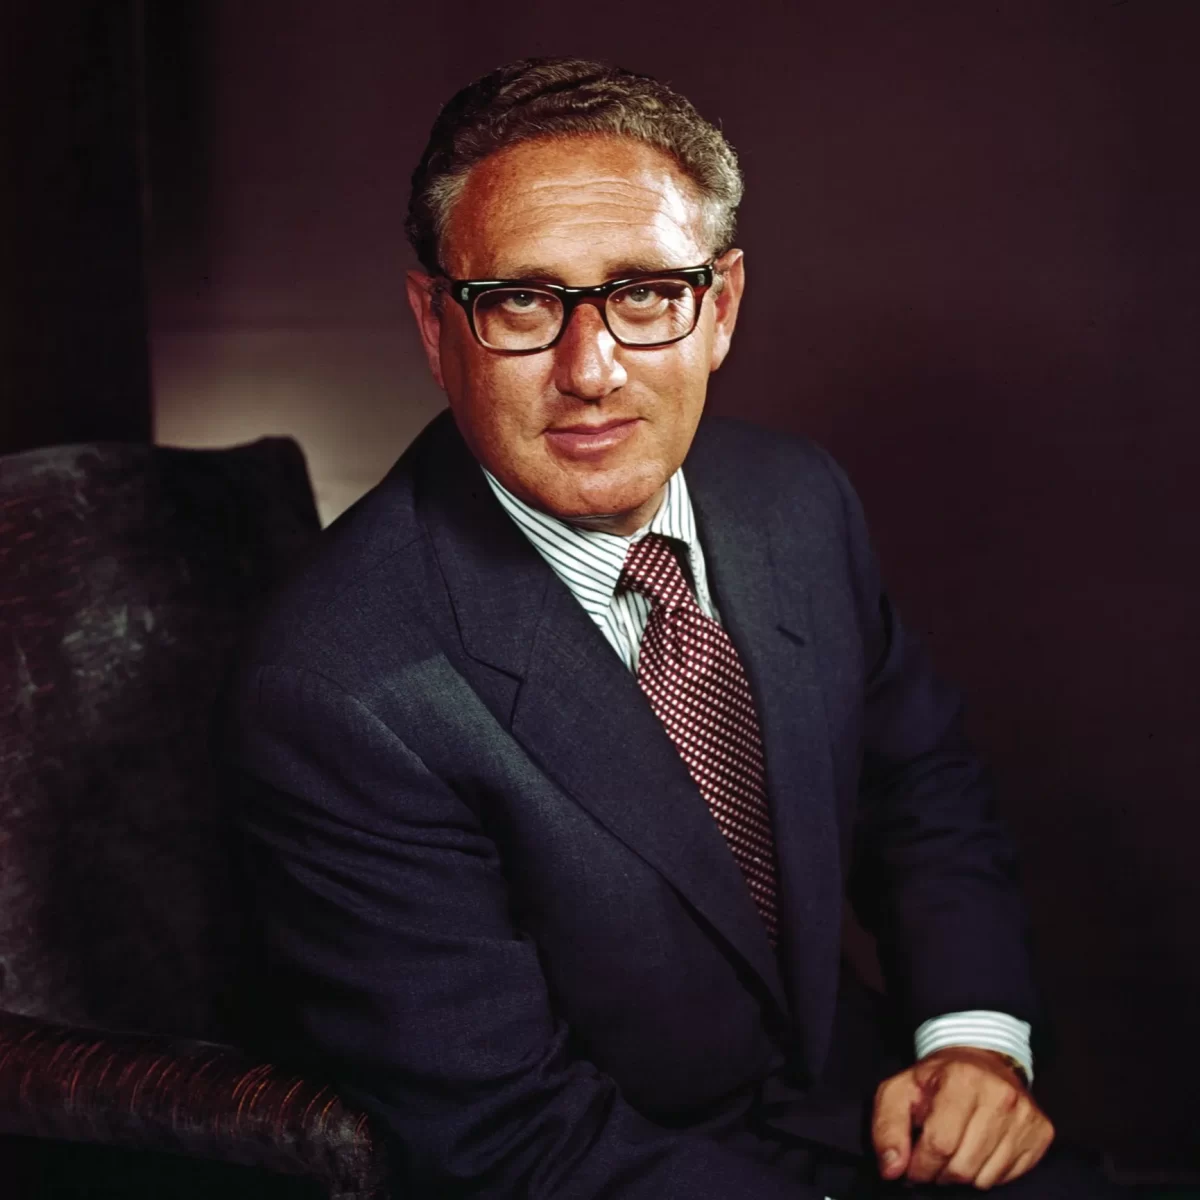 Former Secretary of State and U.S. diplomat Henry Kissinger dies at 100